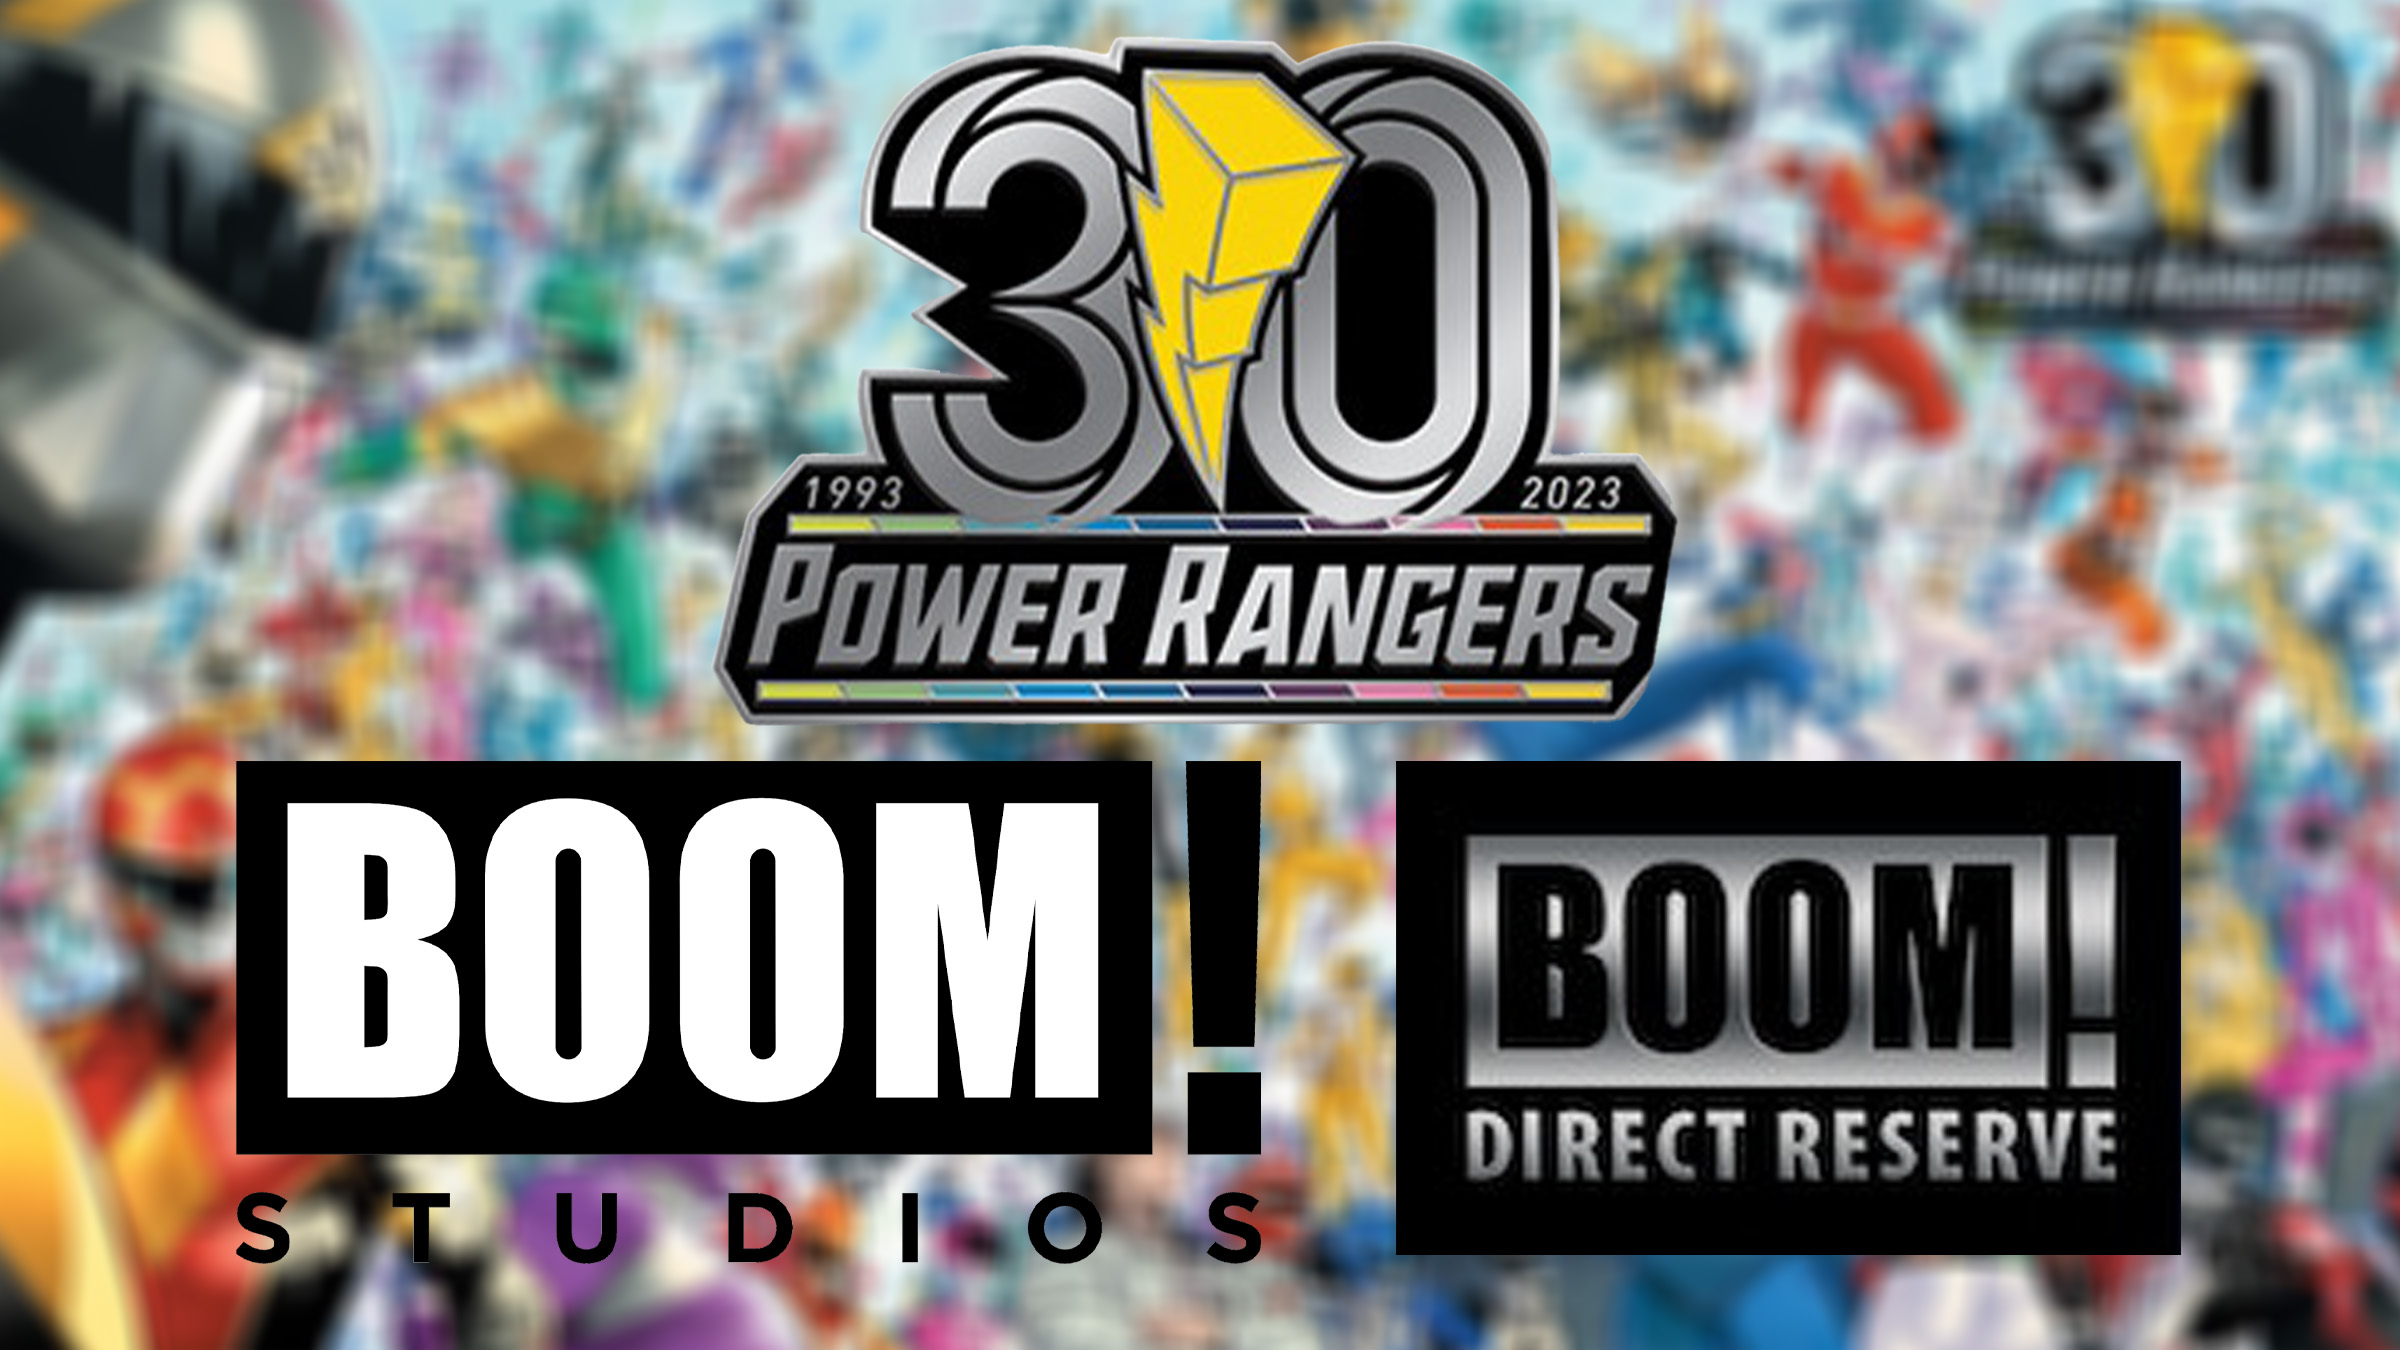 Power Rangers 30